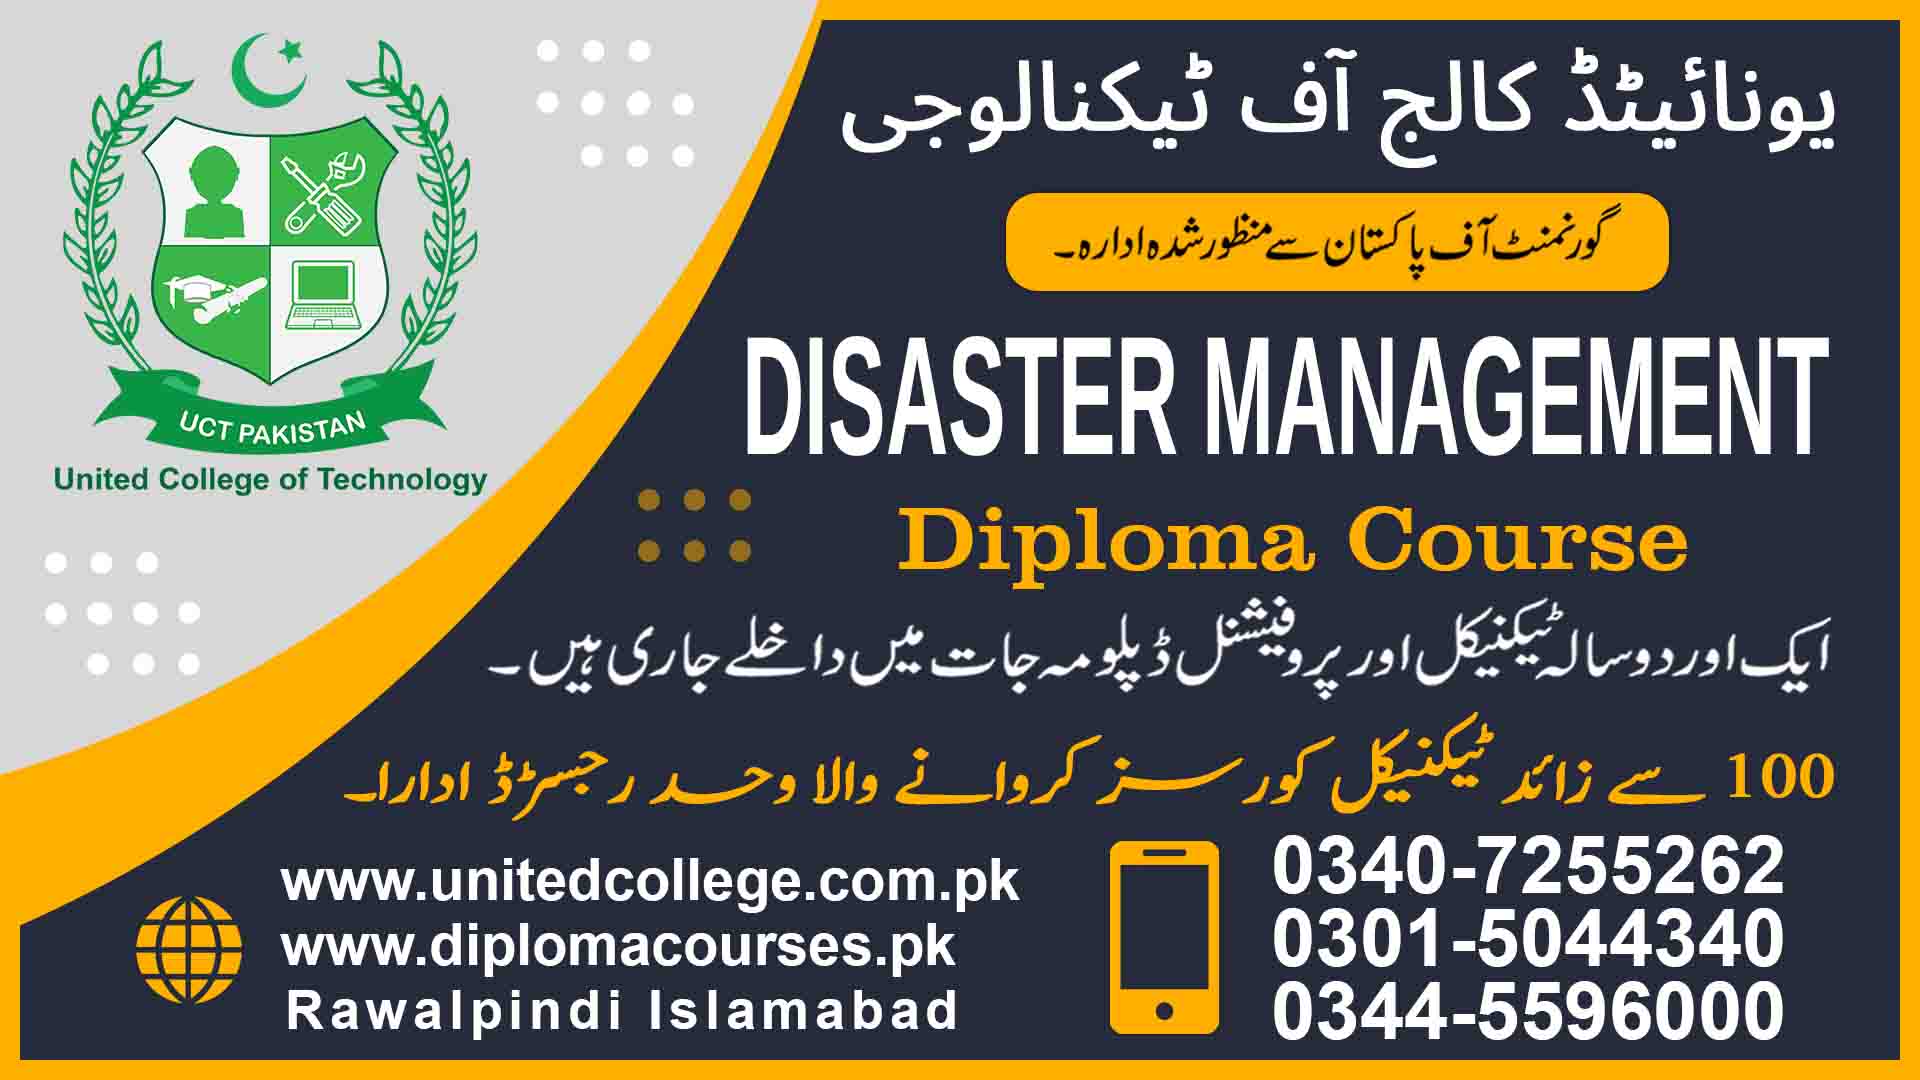 DISASTER MANAGEMENT COURSE IN RAWALPINDI ISLAMABAD PAKISTAN